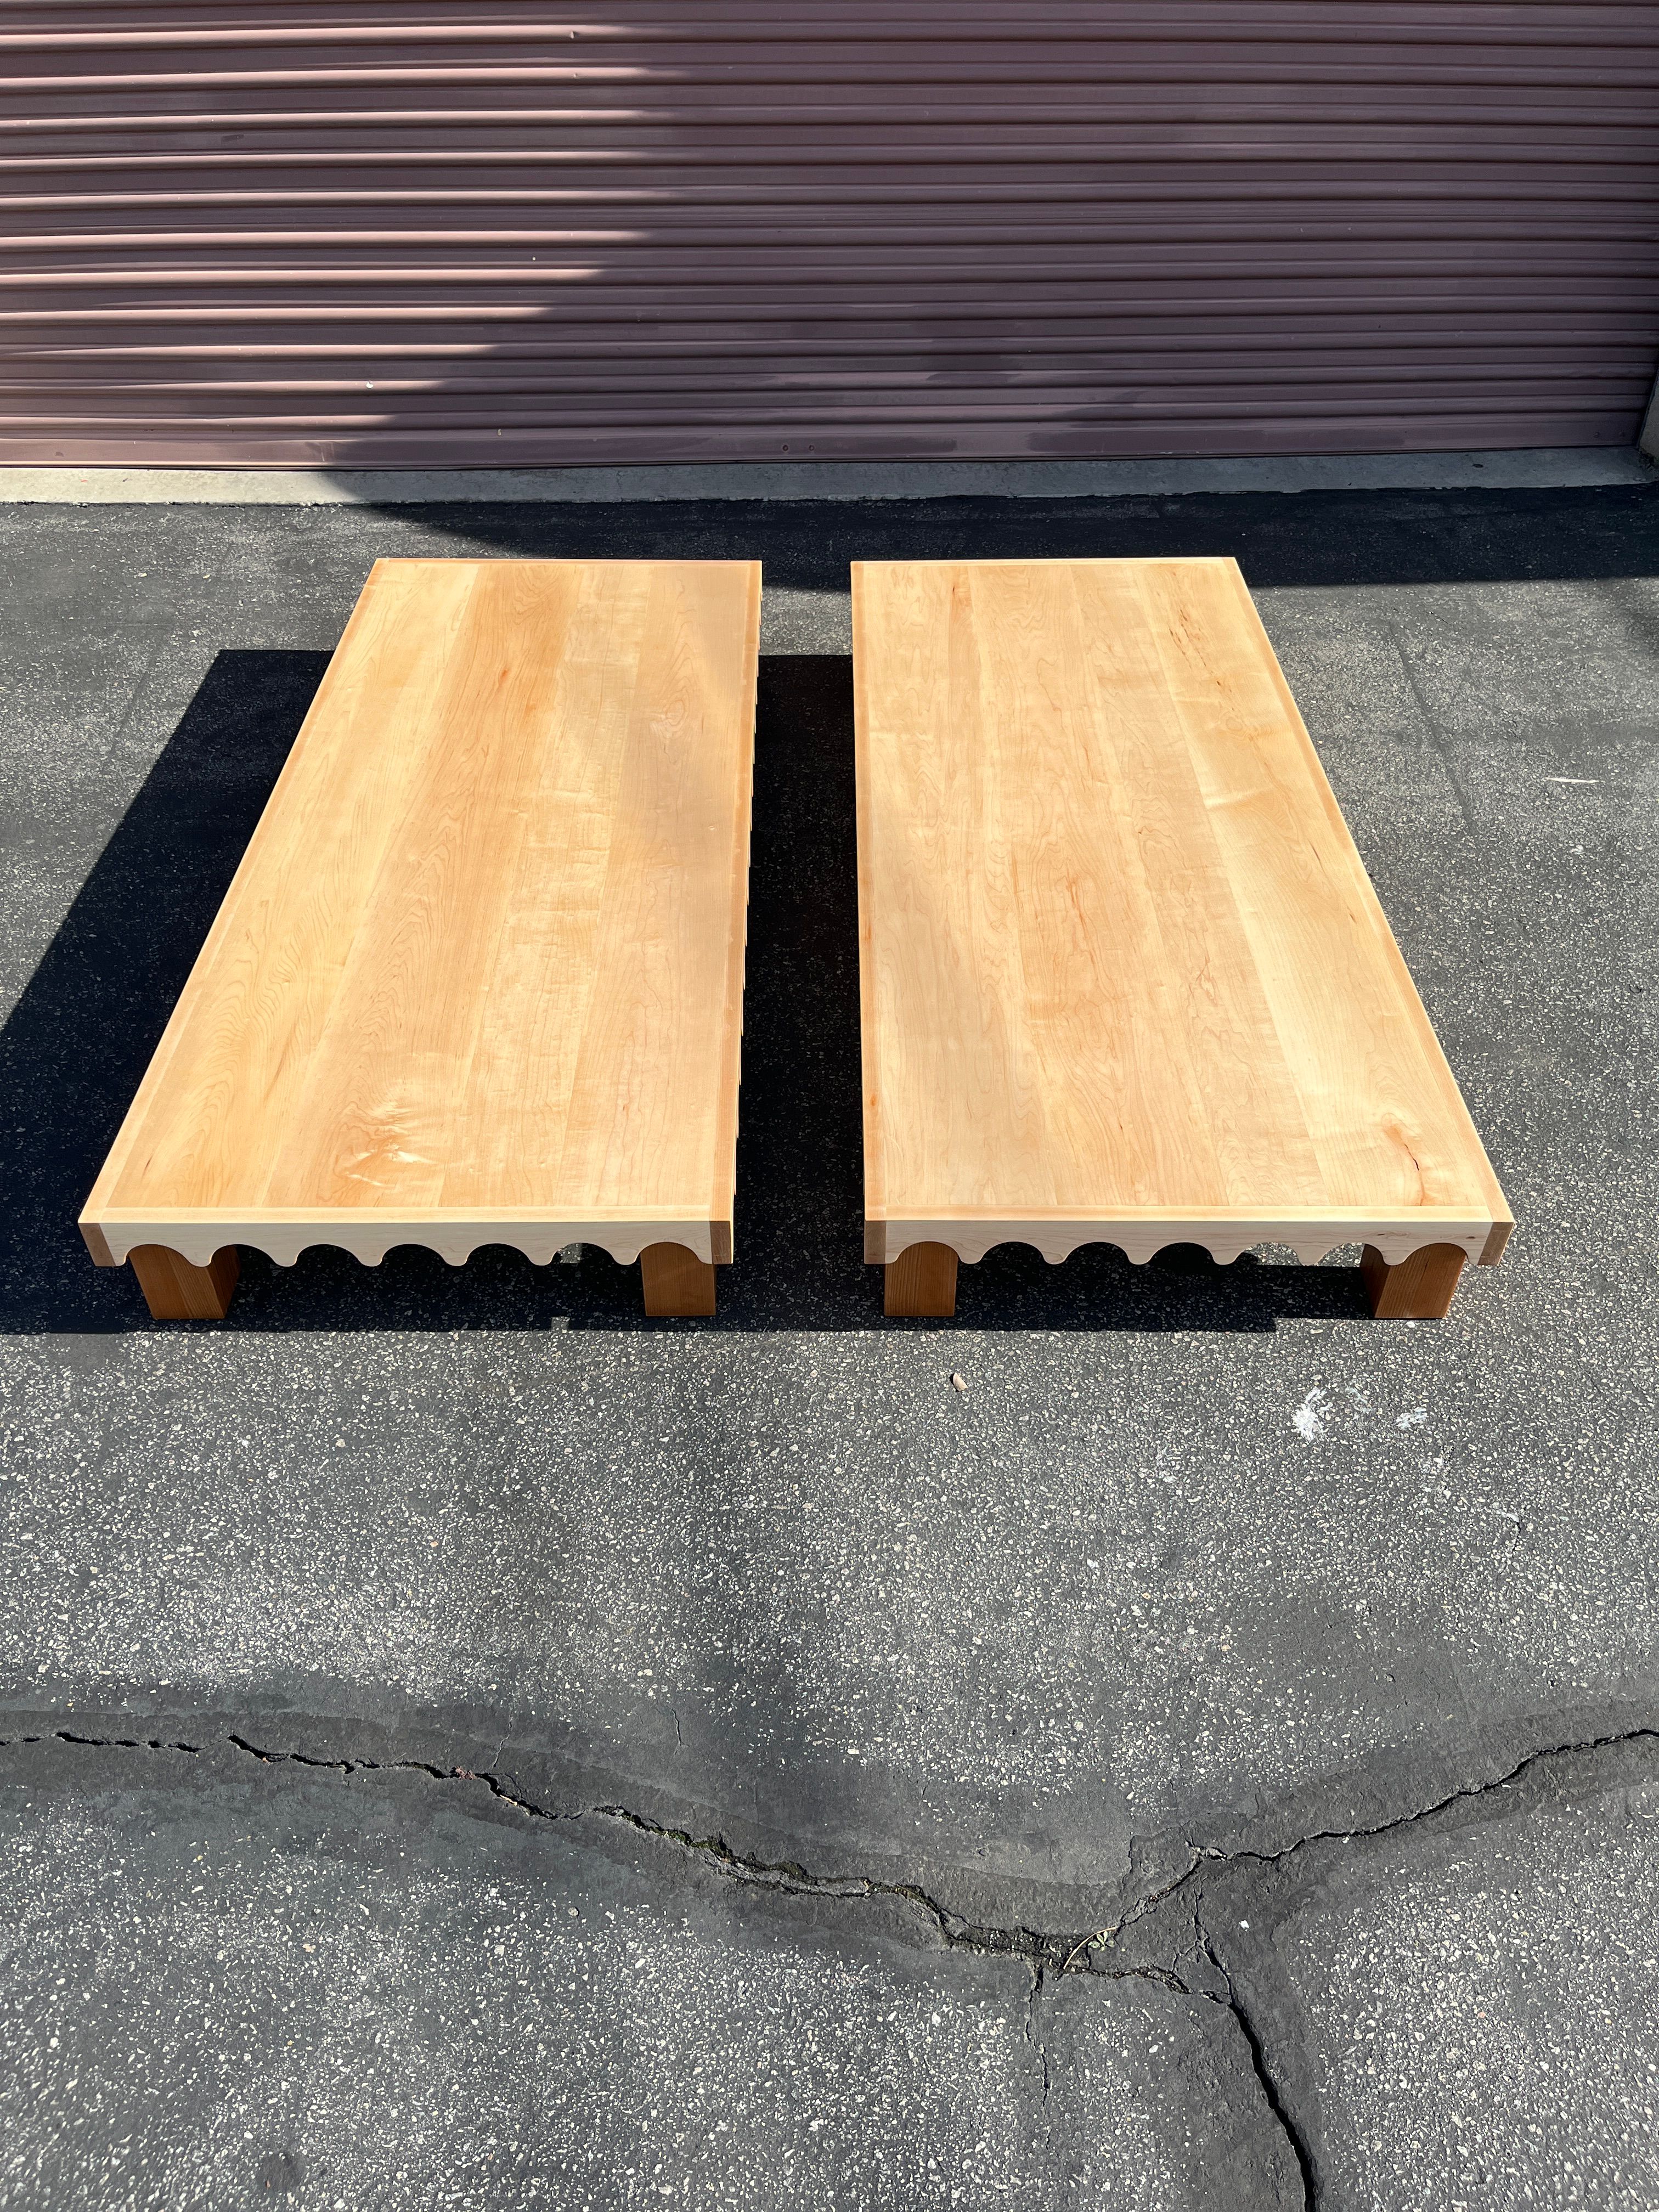  Scallop Benches - Laun Studio product image 4